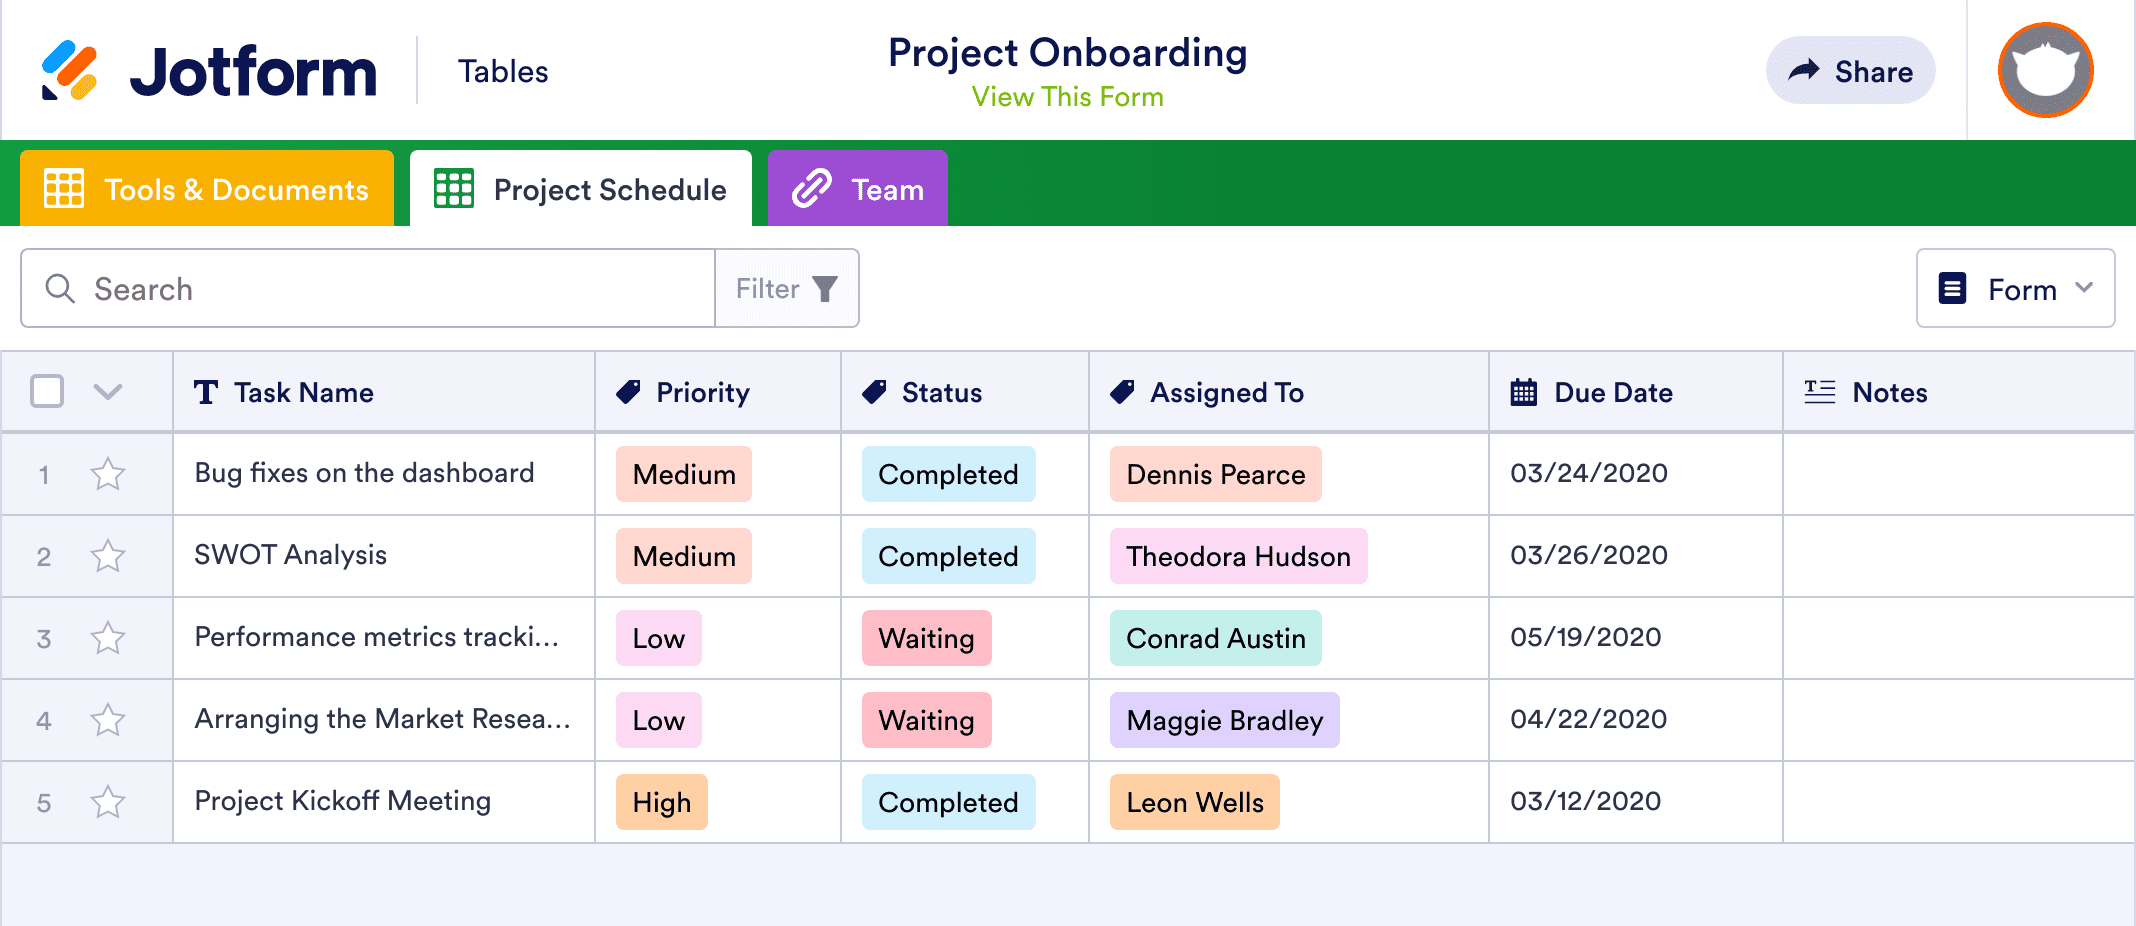 Project Onboarding